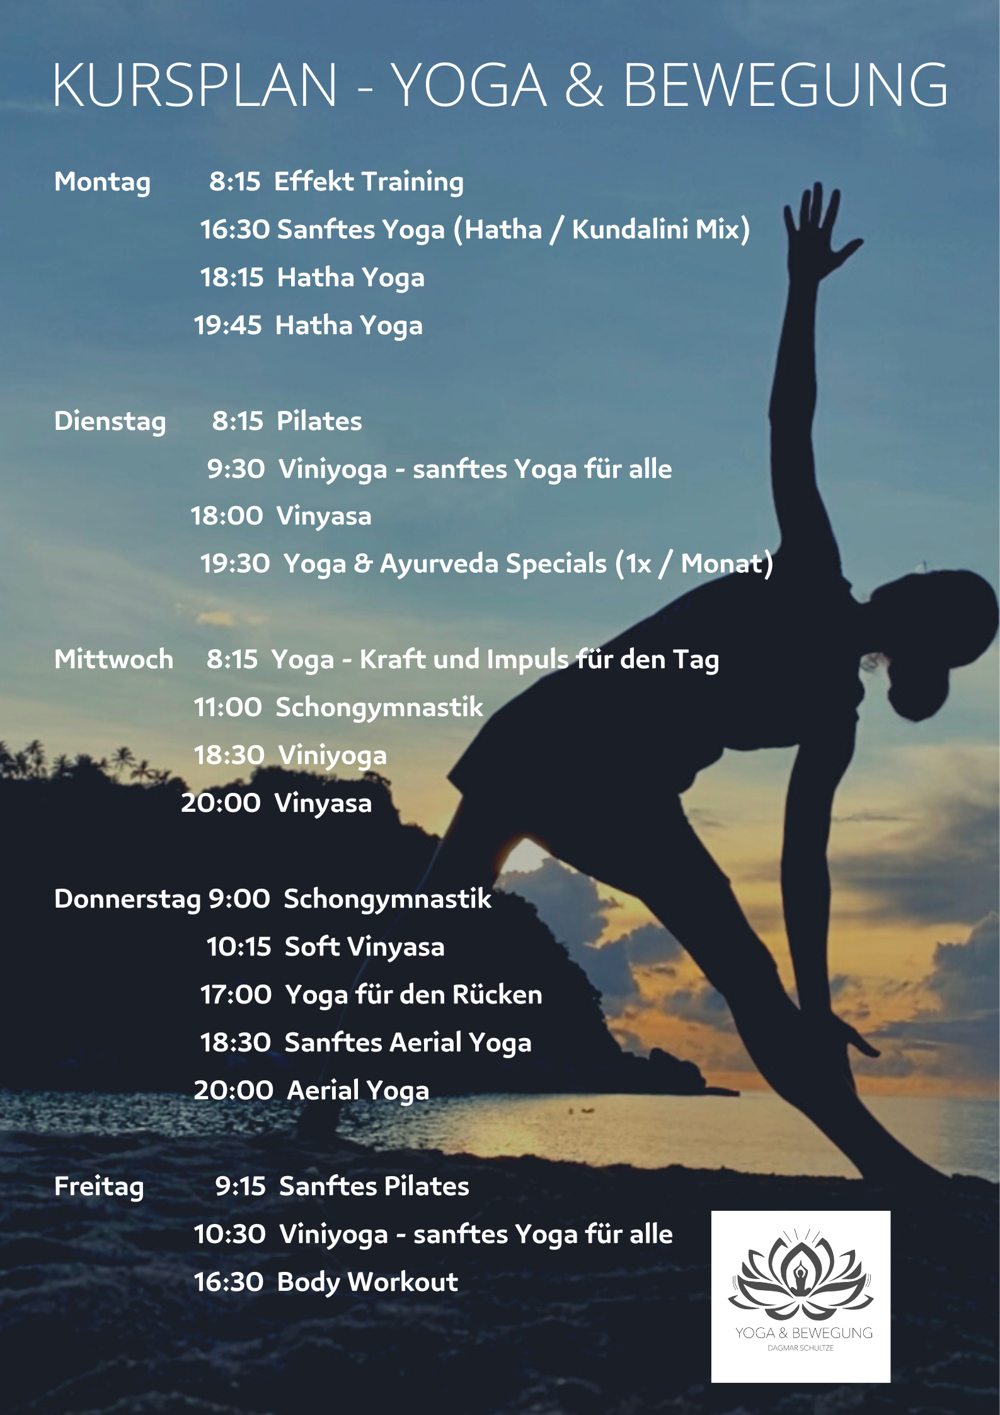 In Heidelberg: Yoga und Pilates Kurse, Aerial Yoga, Schongymnastik, Body Workout